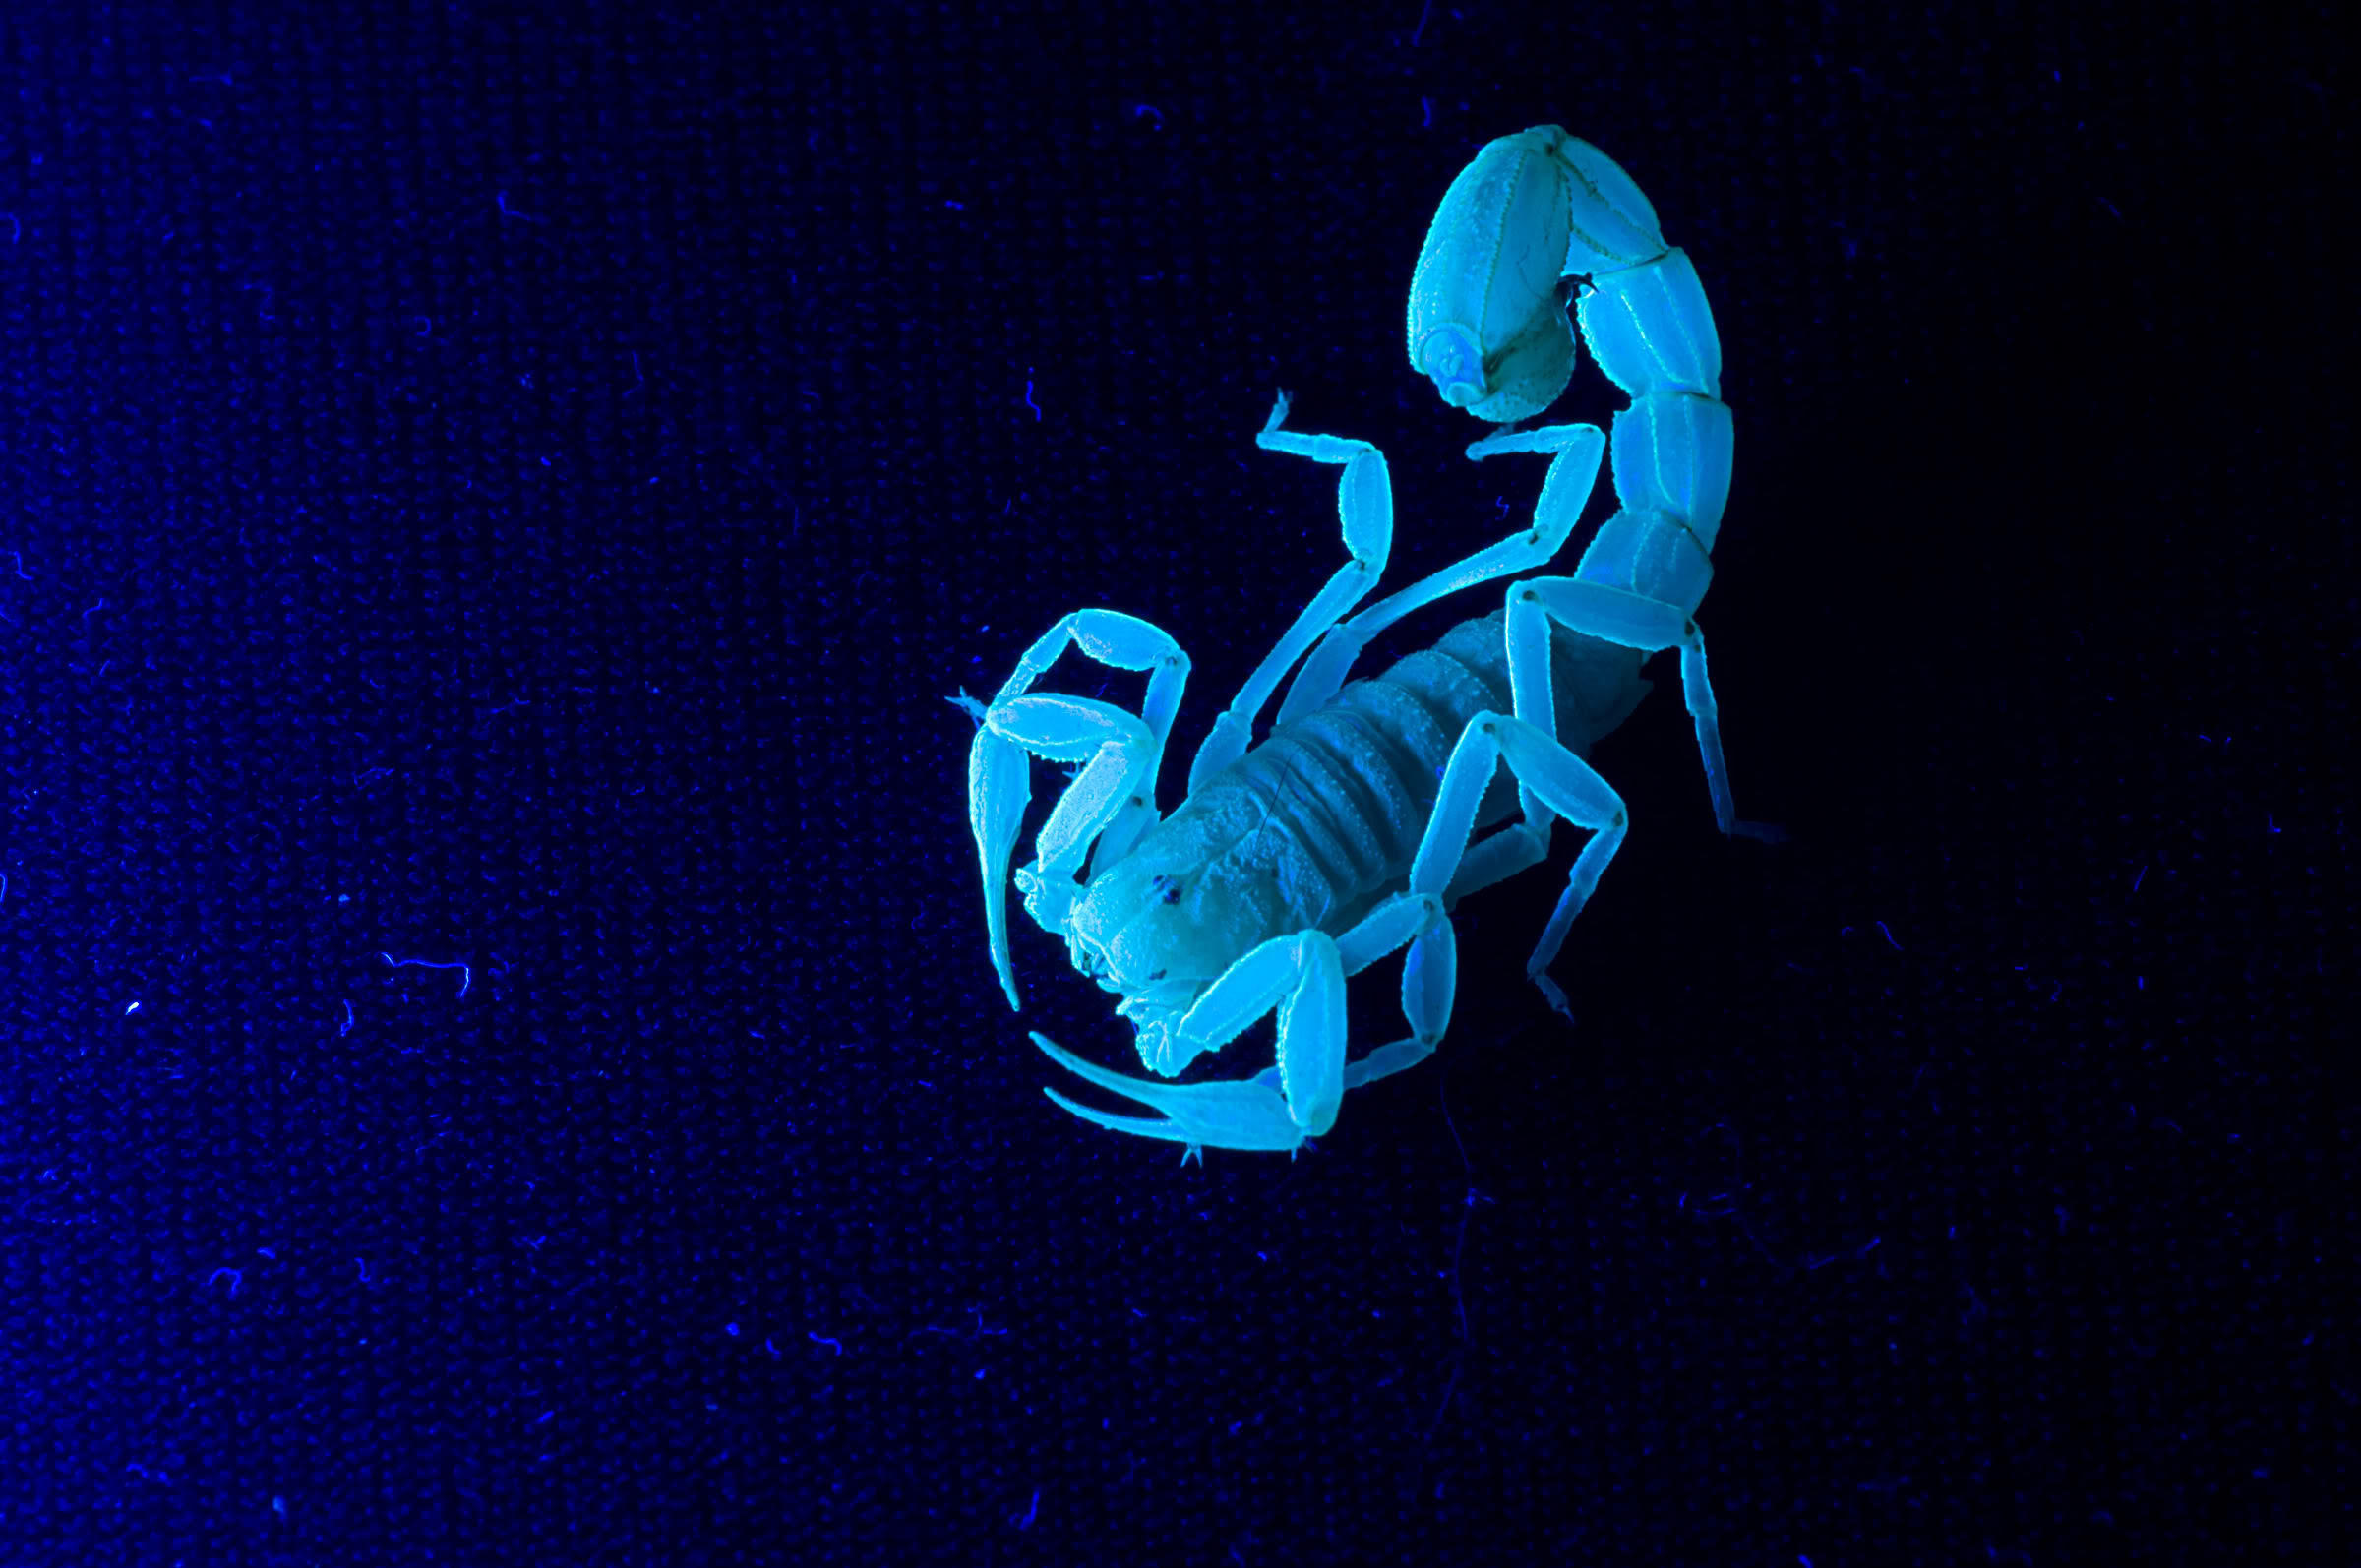 Scorpion Abstract Wallpaper Photo Bhstorm